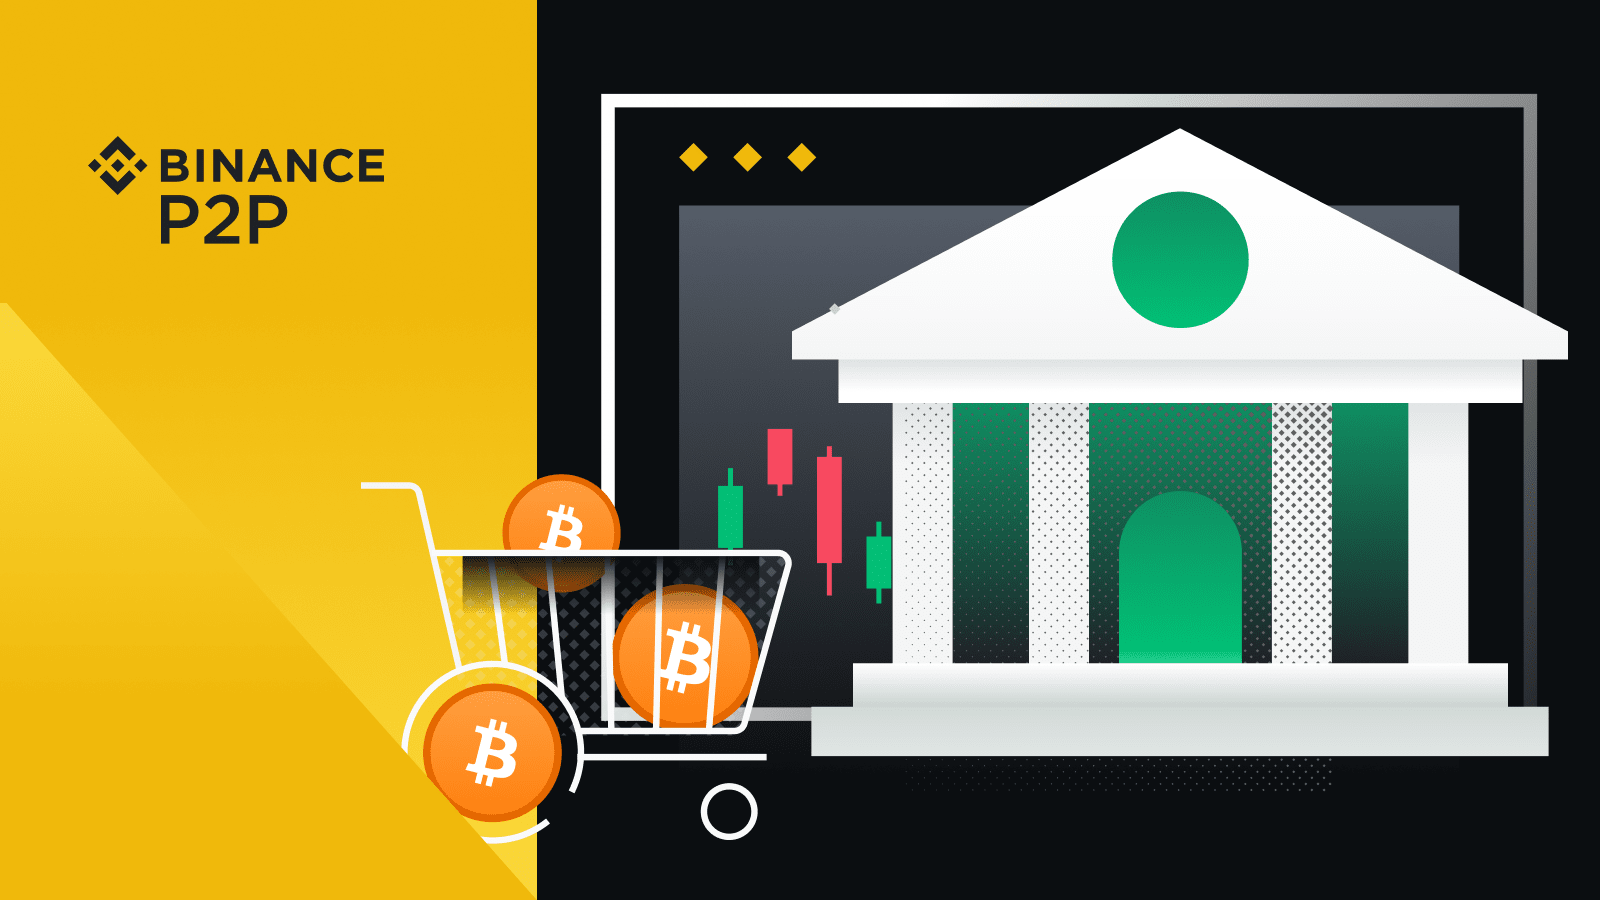 Buy Bitcoin with Bank Account & Bank Transfer | Coinmama